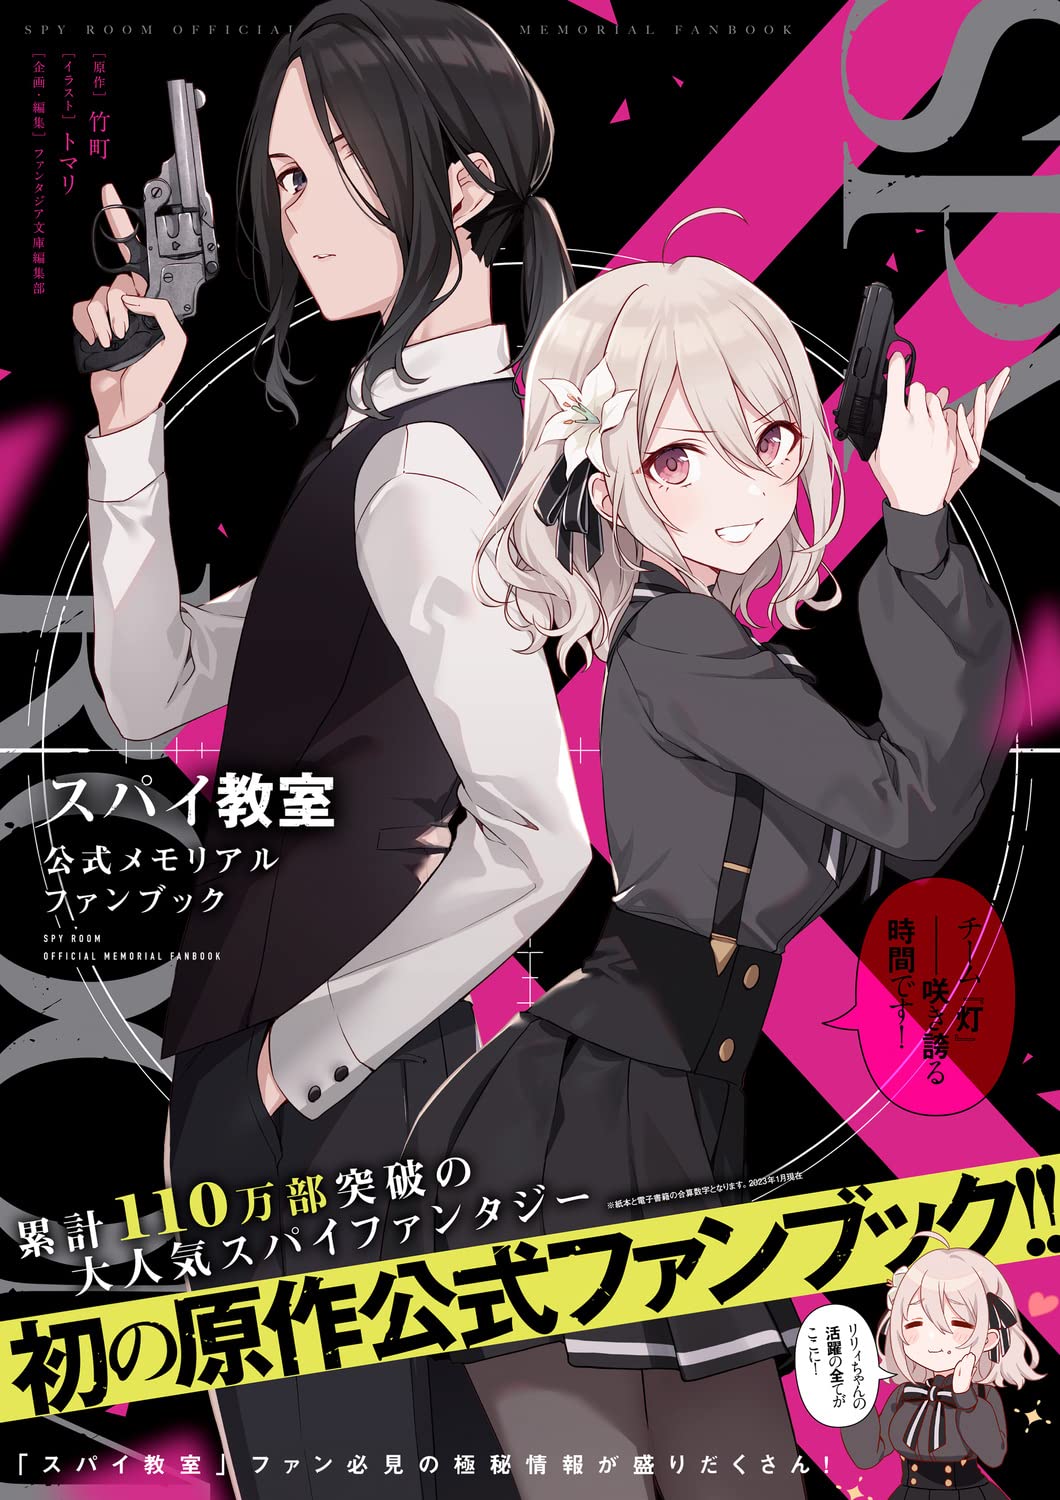 Spy Classroom (manga), Spy Classroom Wiki